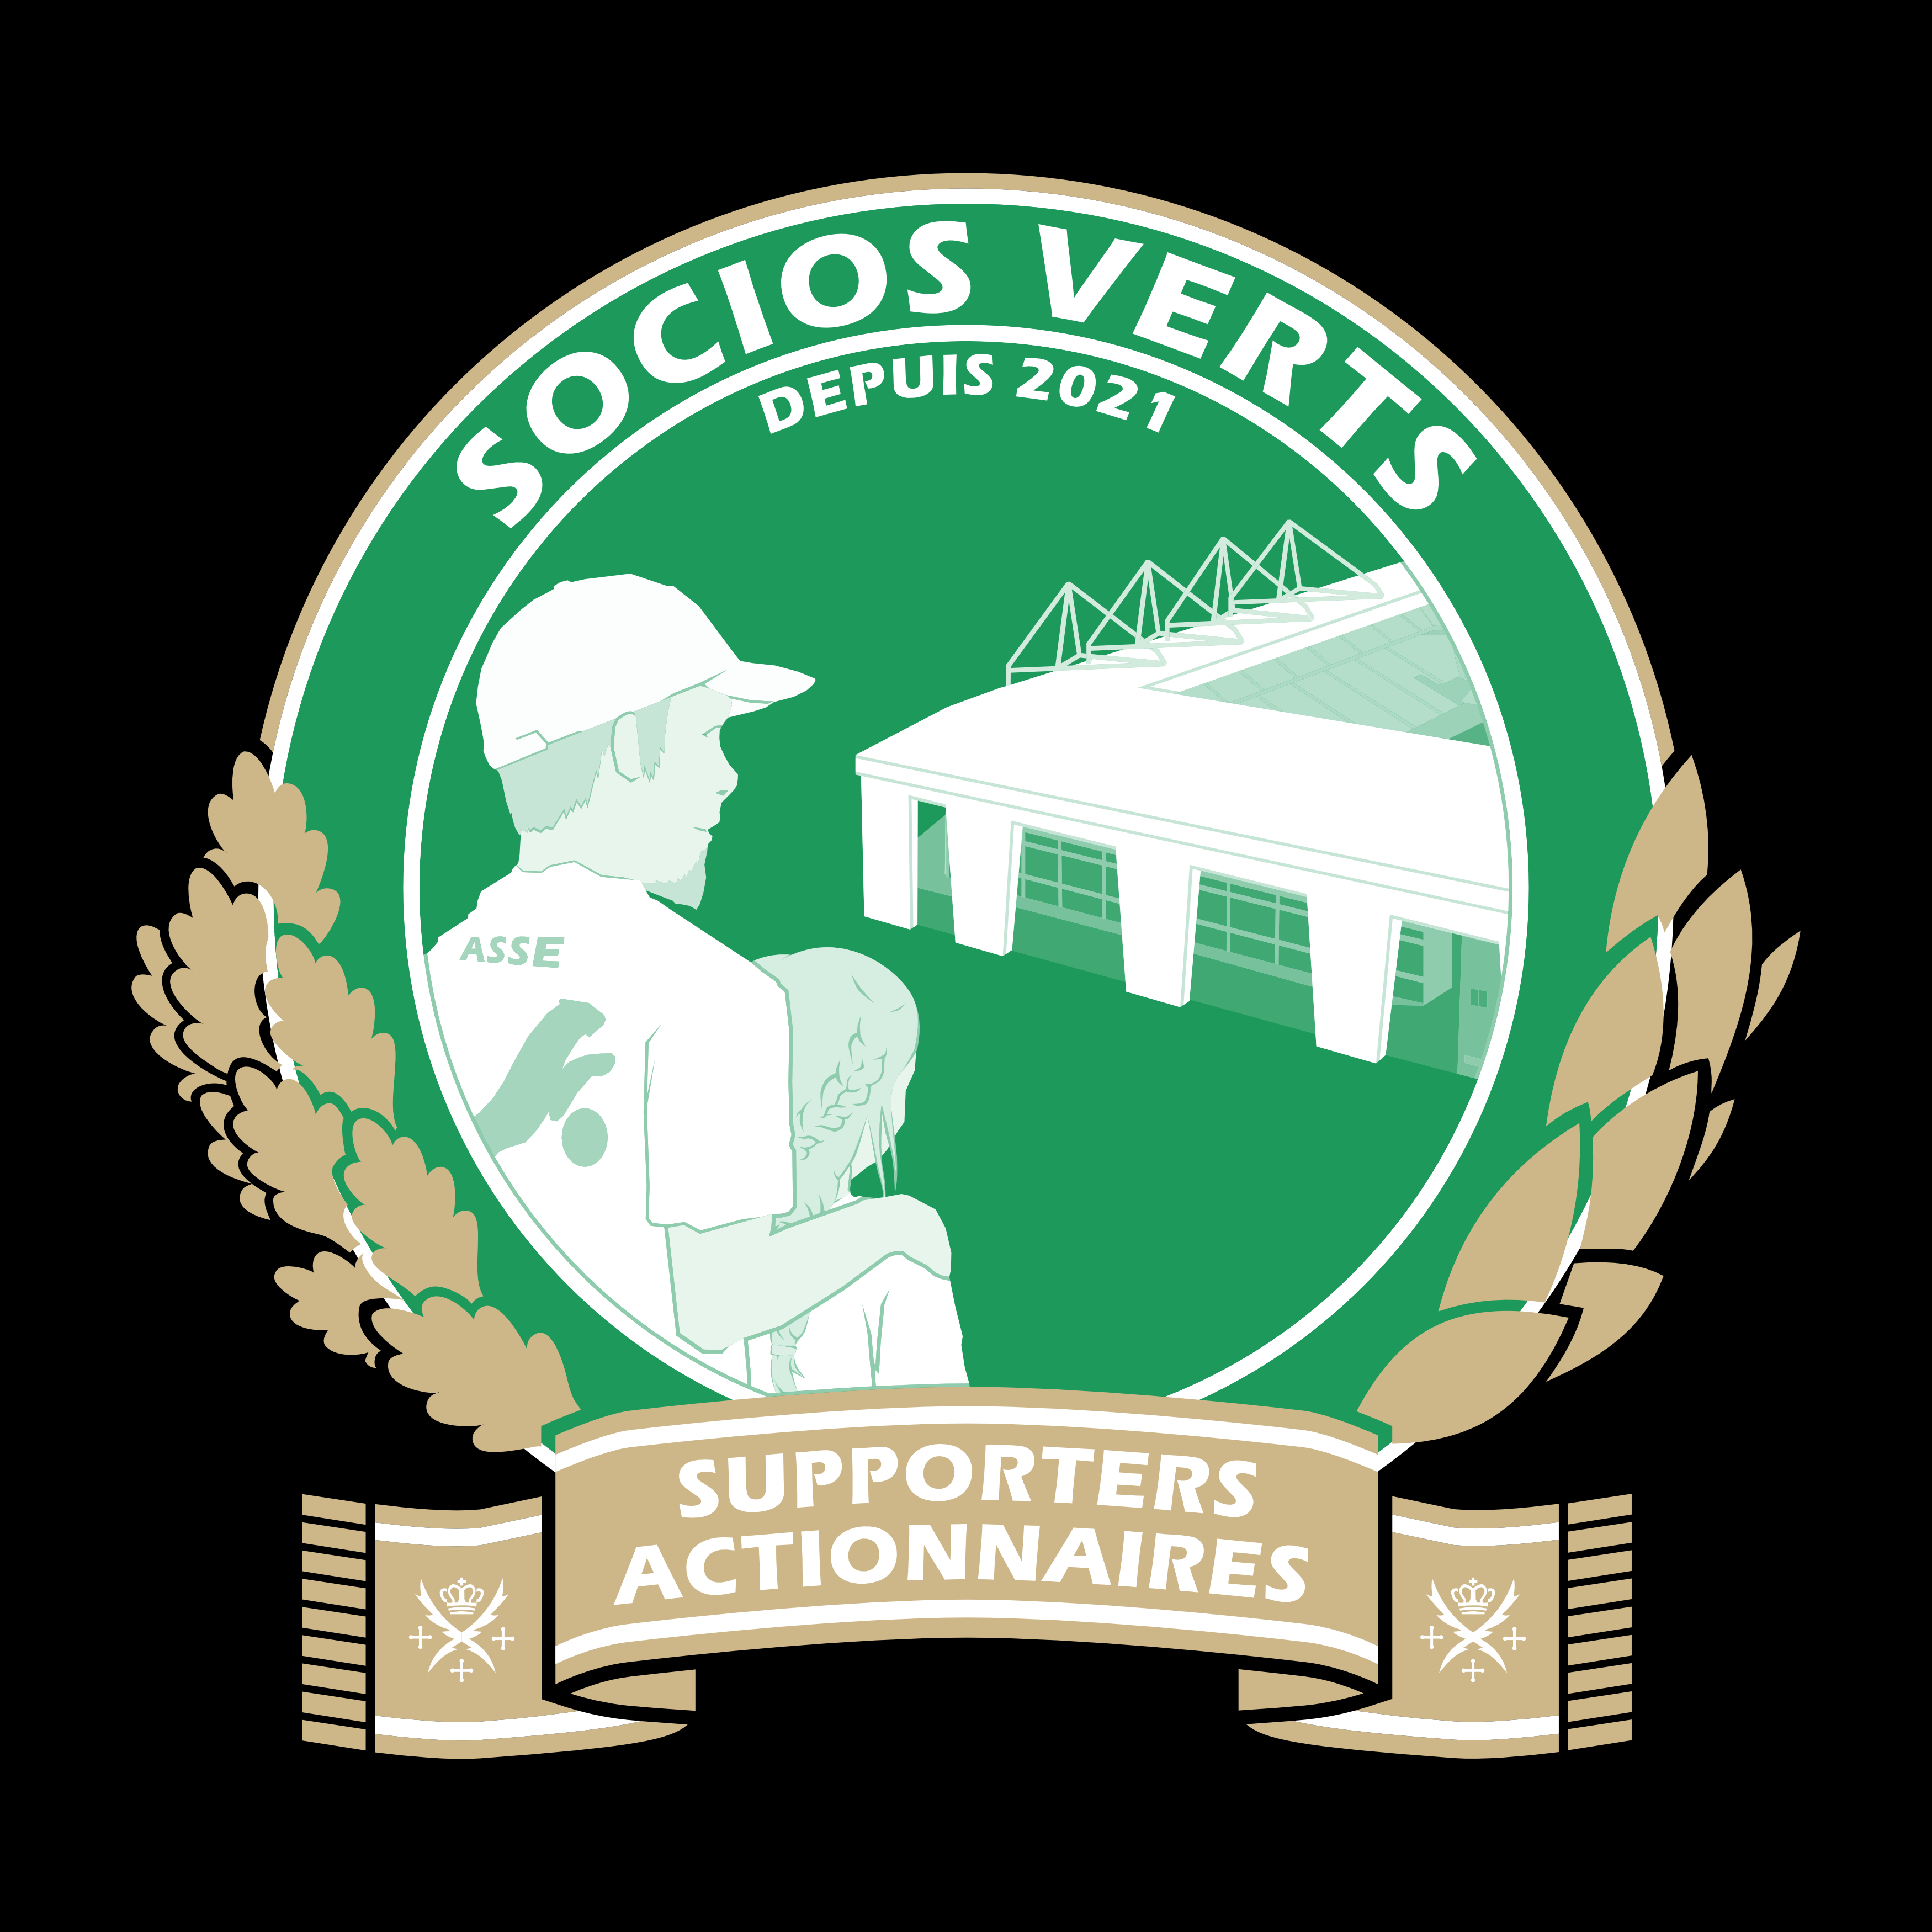 Logo des Socios Verts 